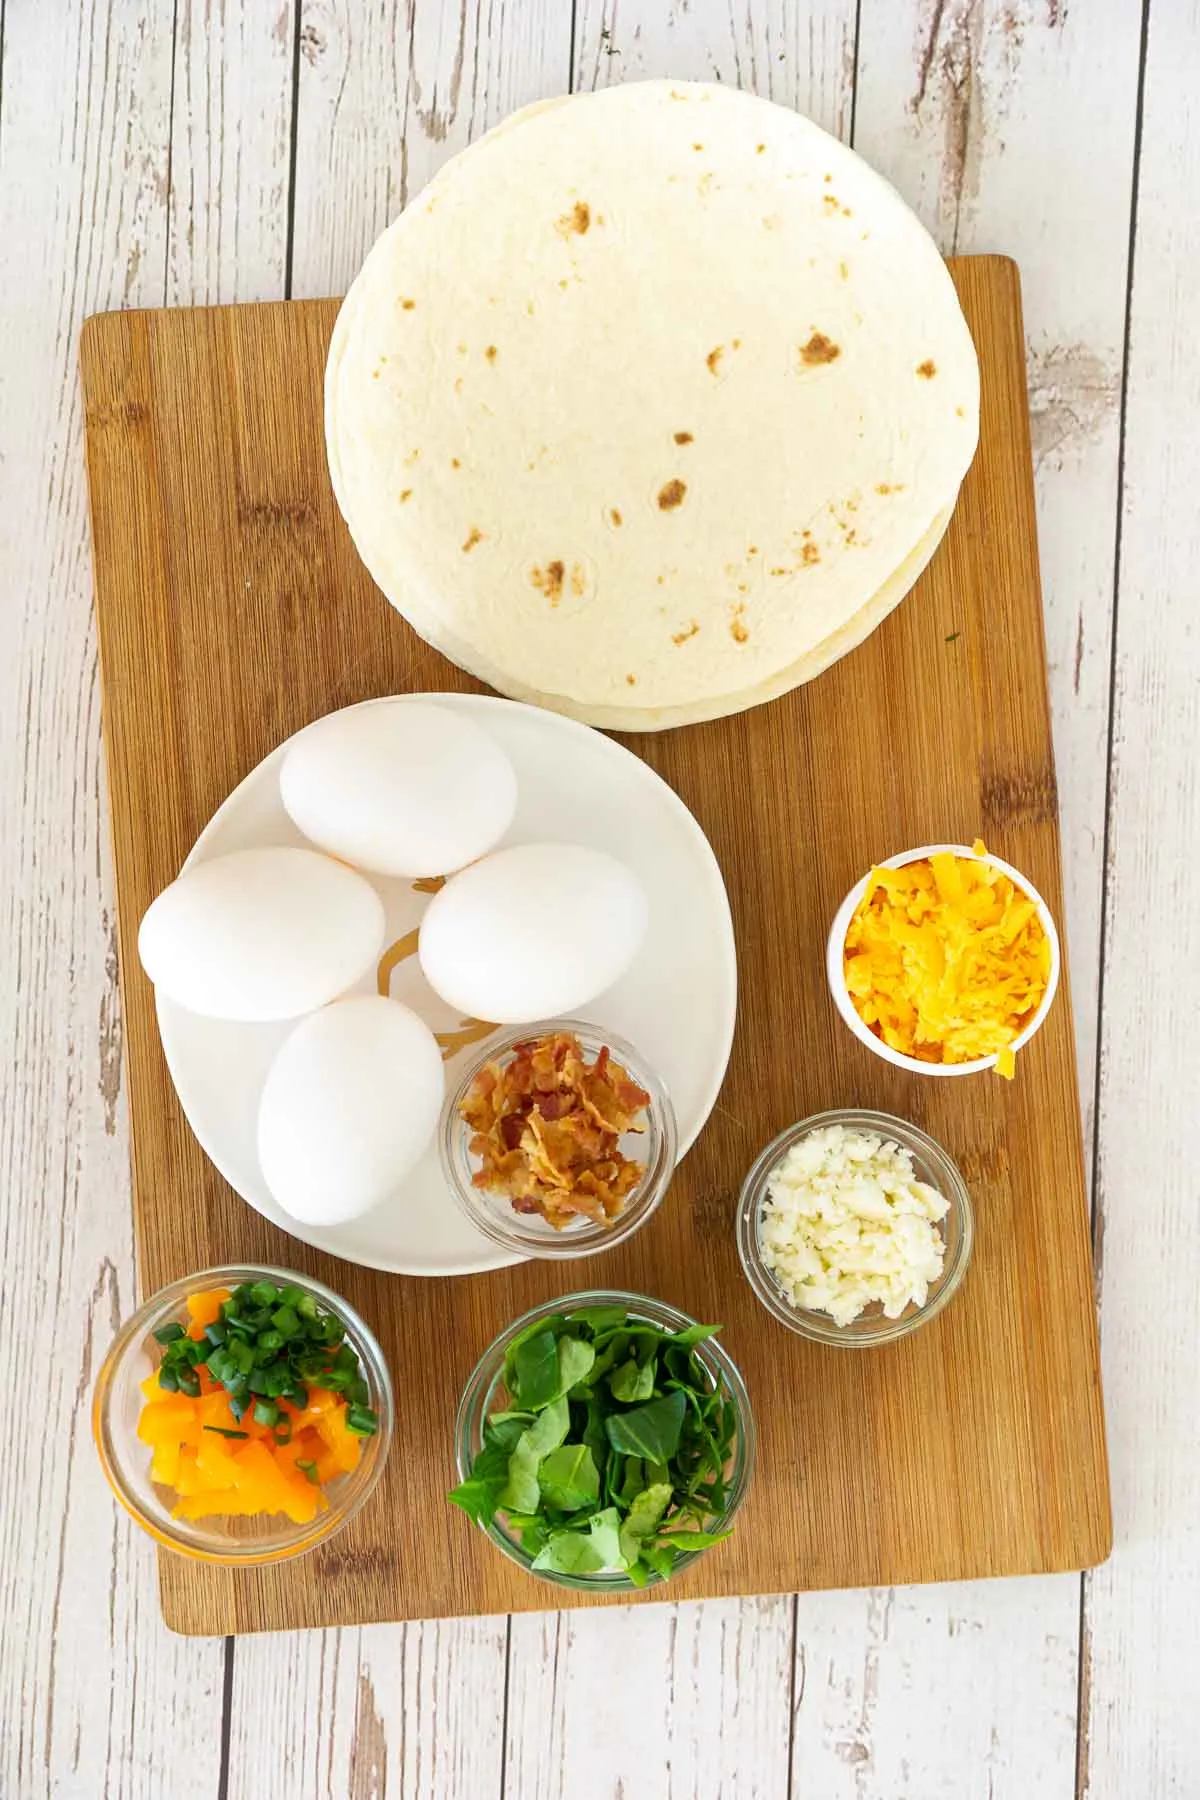 Ingredients to make tortilla egg skillet wraps.